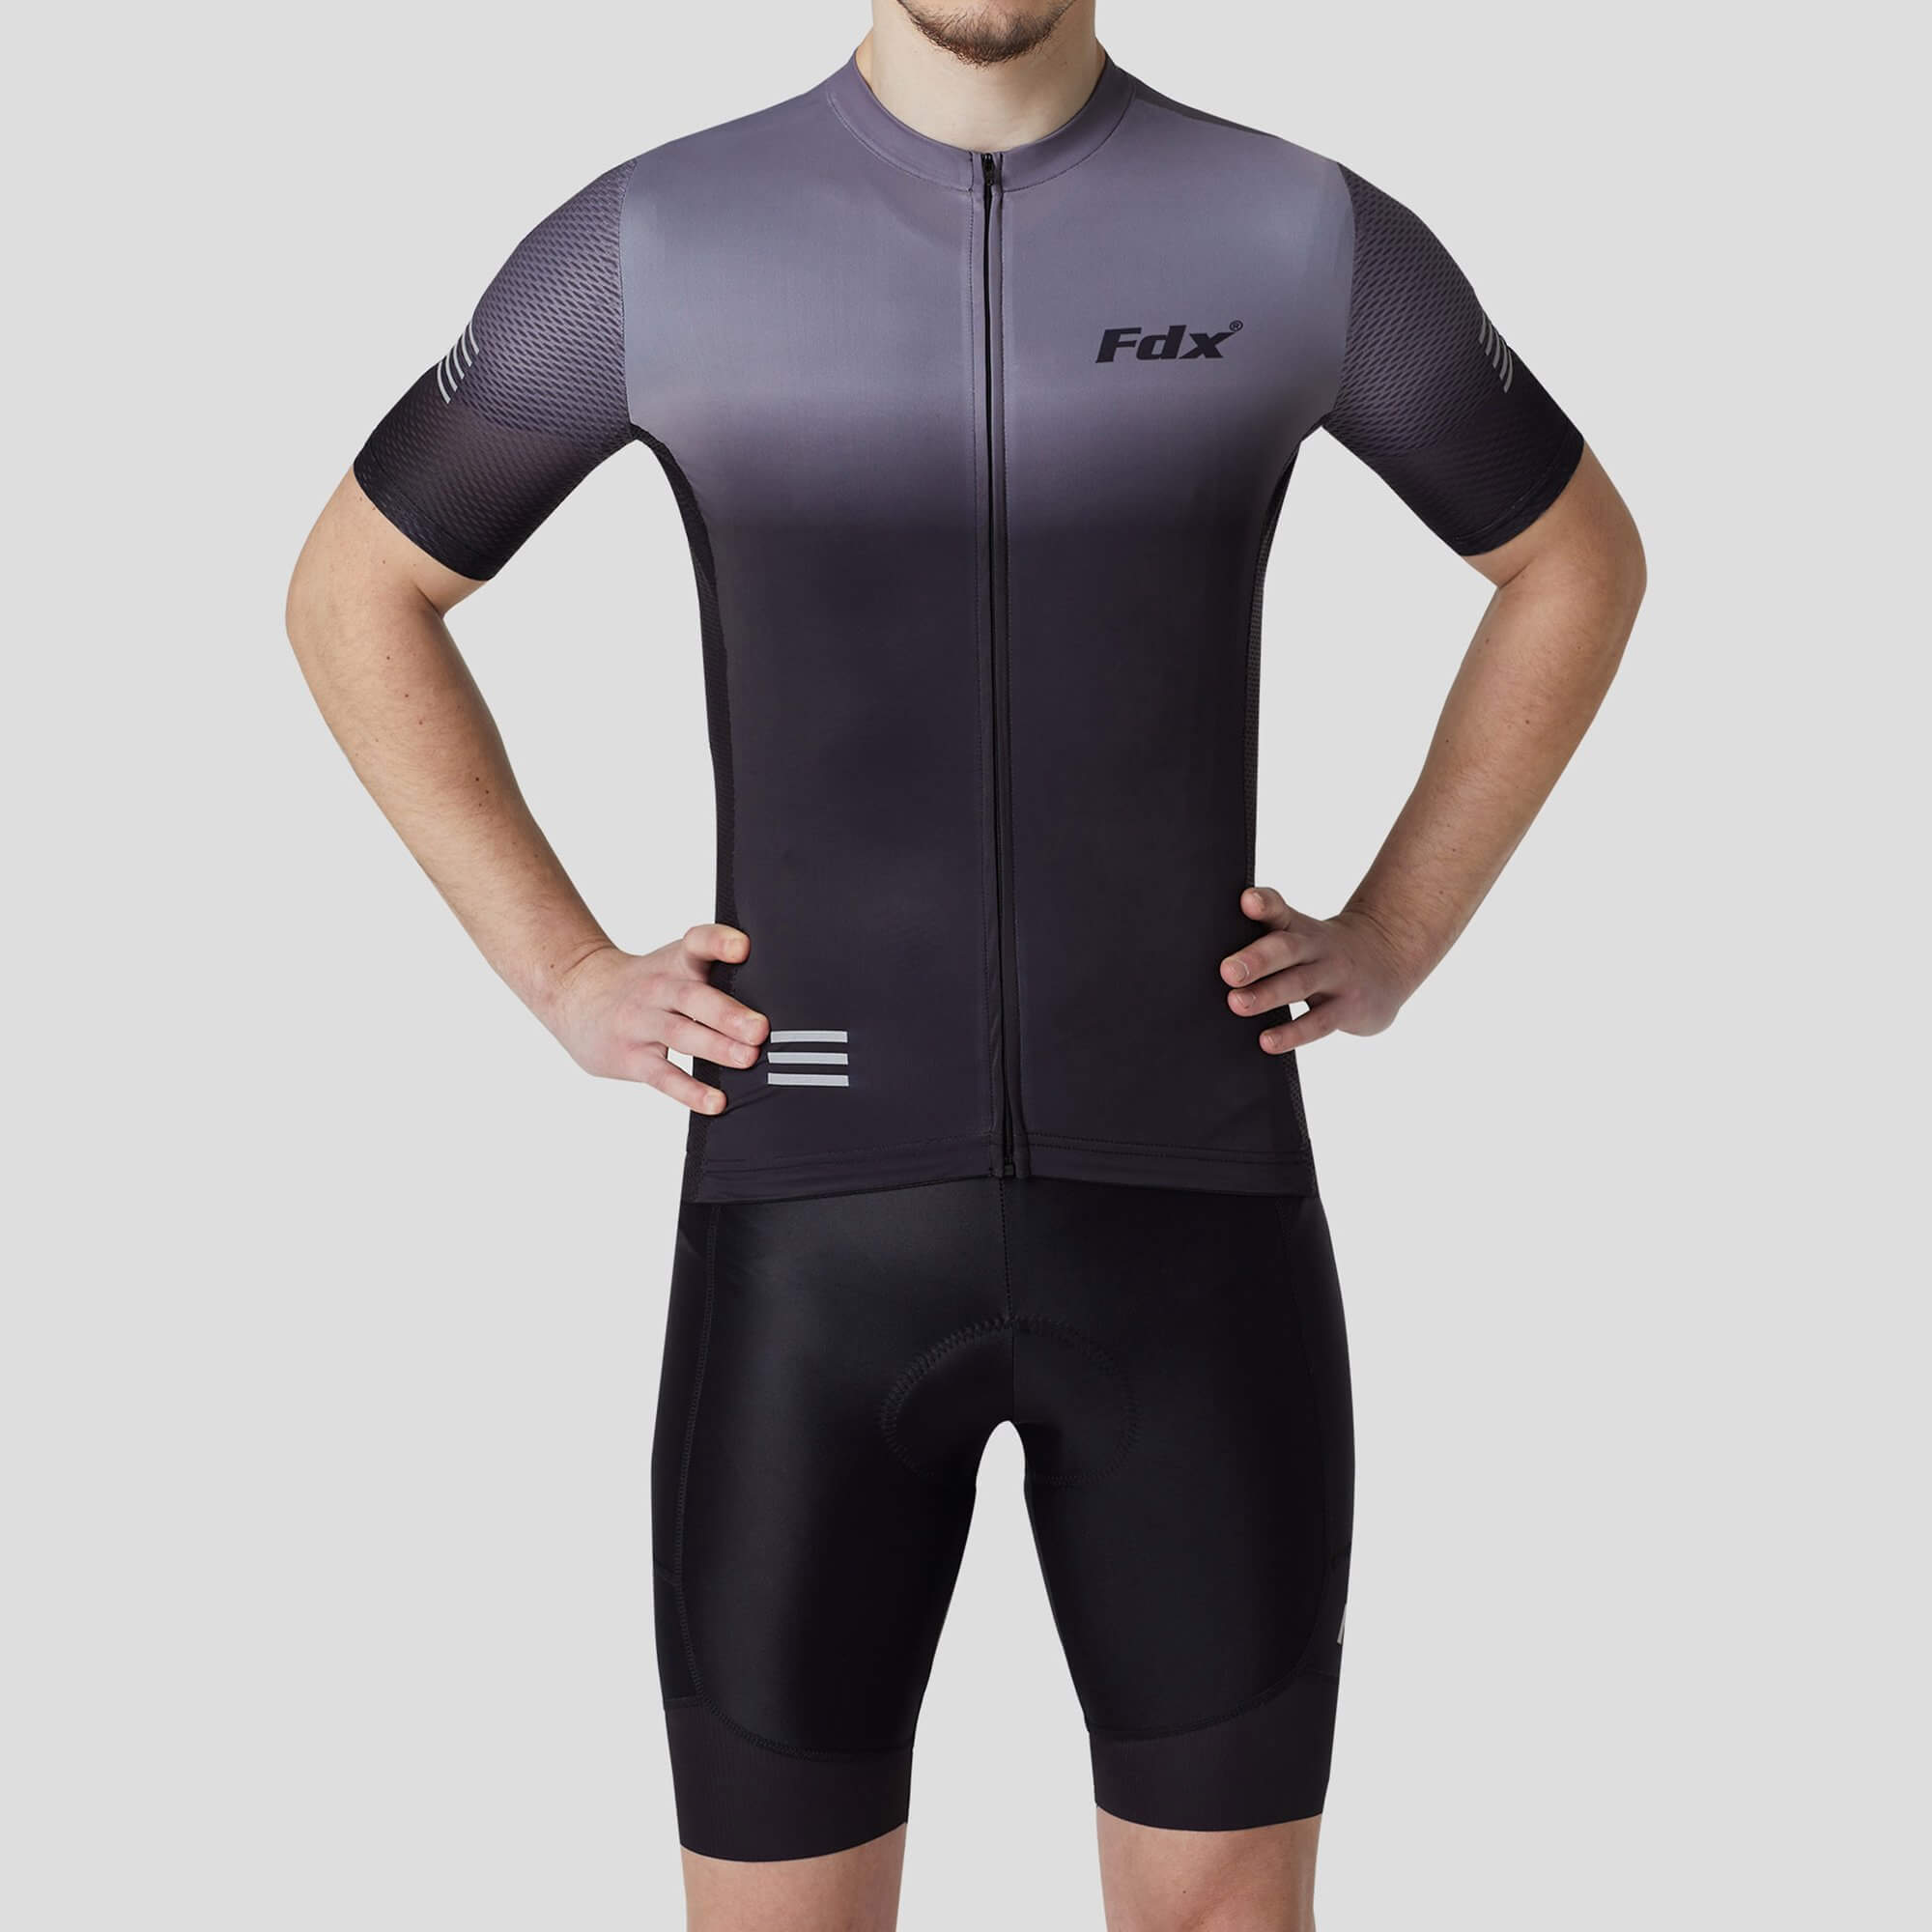 Fdx Mens Grey & Black Half Sleeve Summer Cycling Jersey Breathable lightweght Fabric, Bib Short Hi Viz Reflectors & Full Zipper Cycling Gear Australia